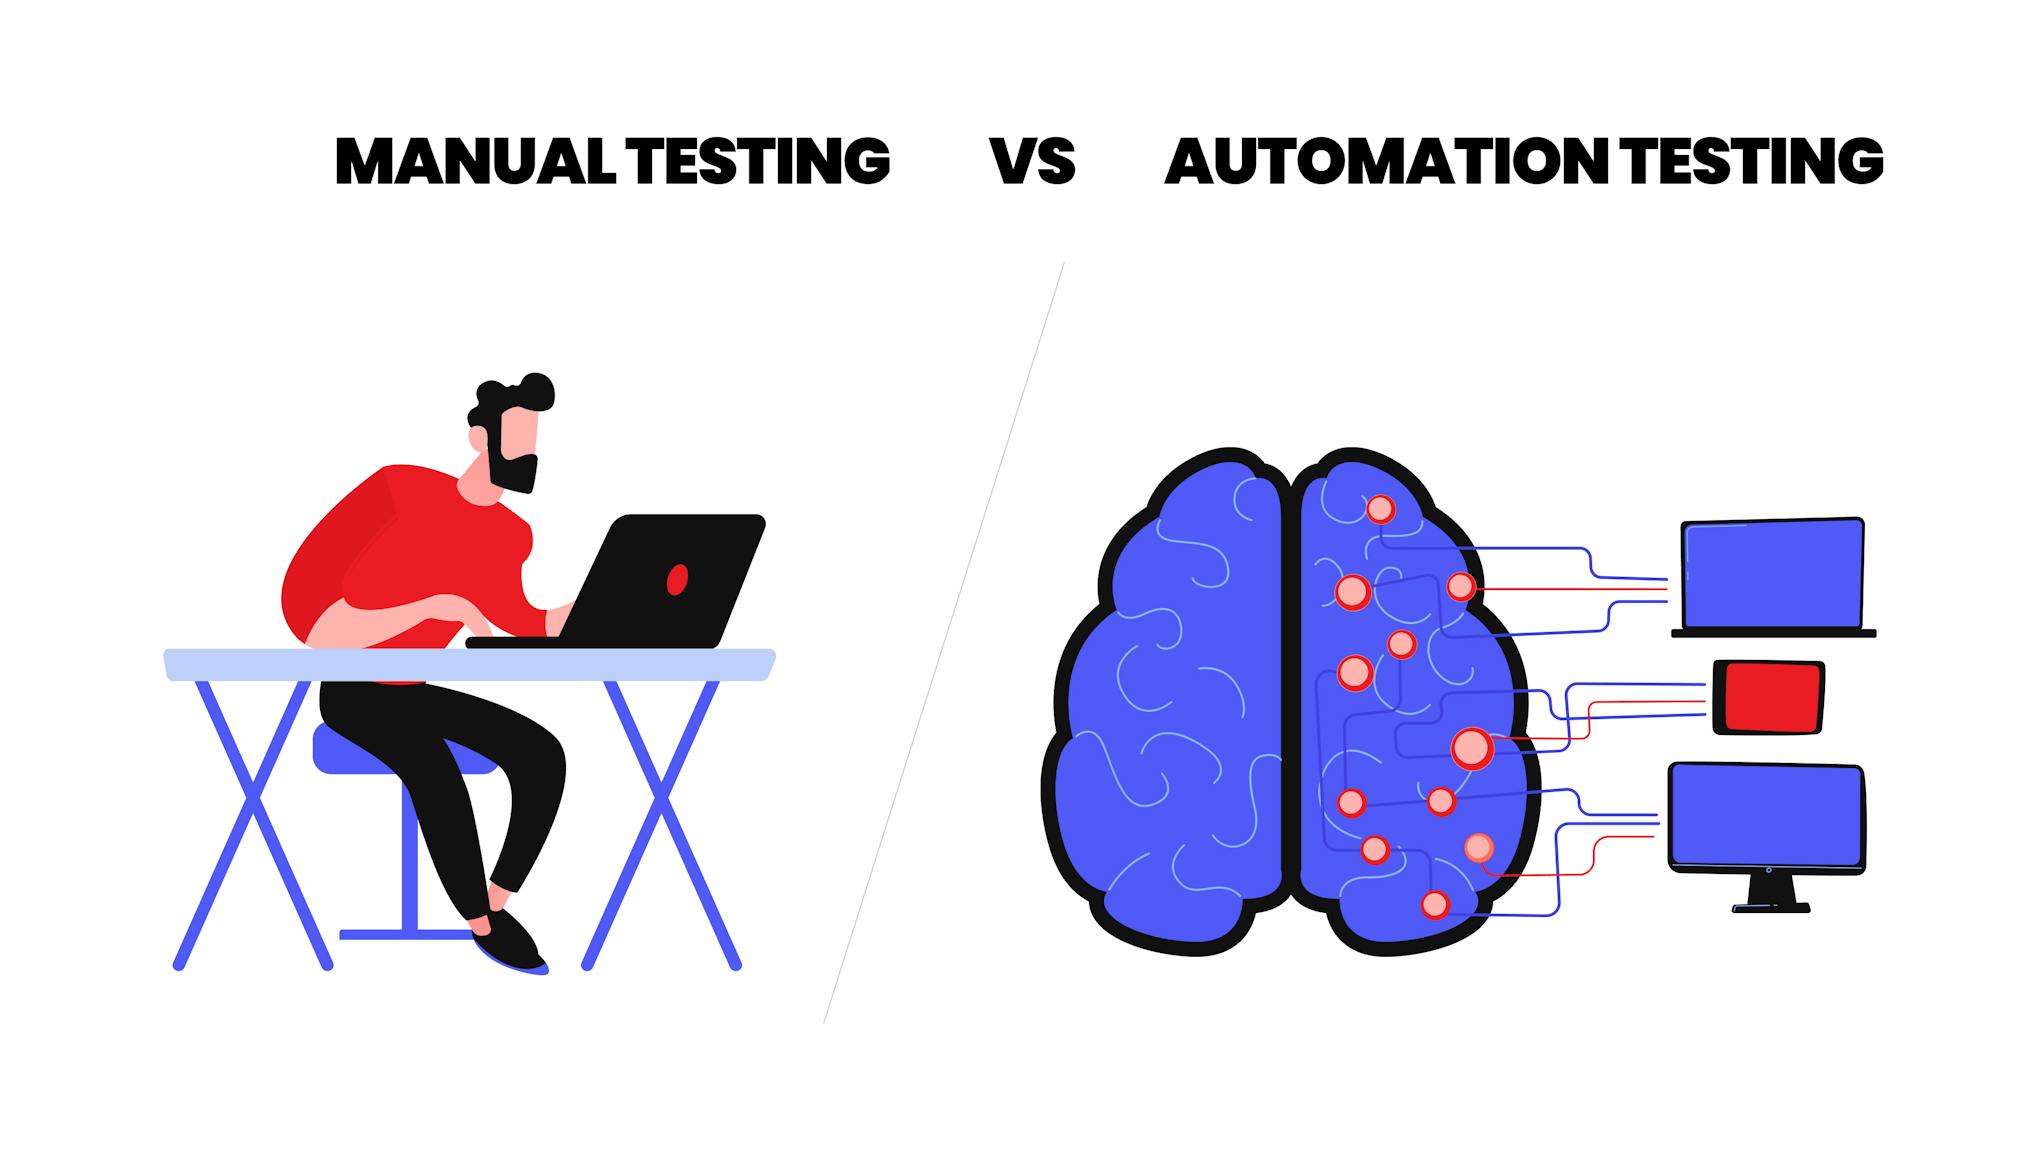 Manual testing vs. Automation testing